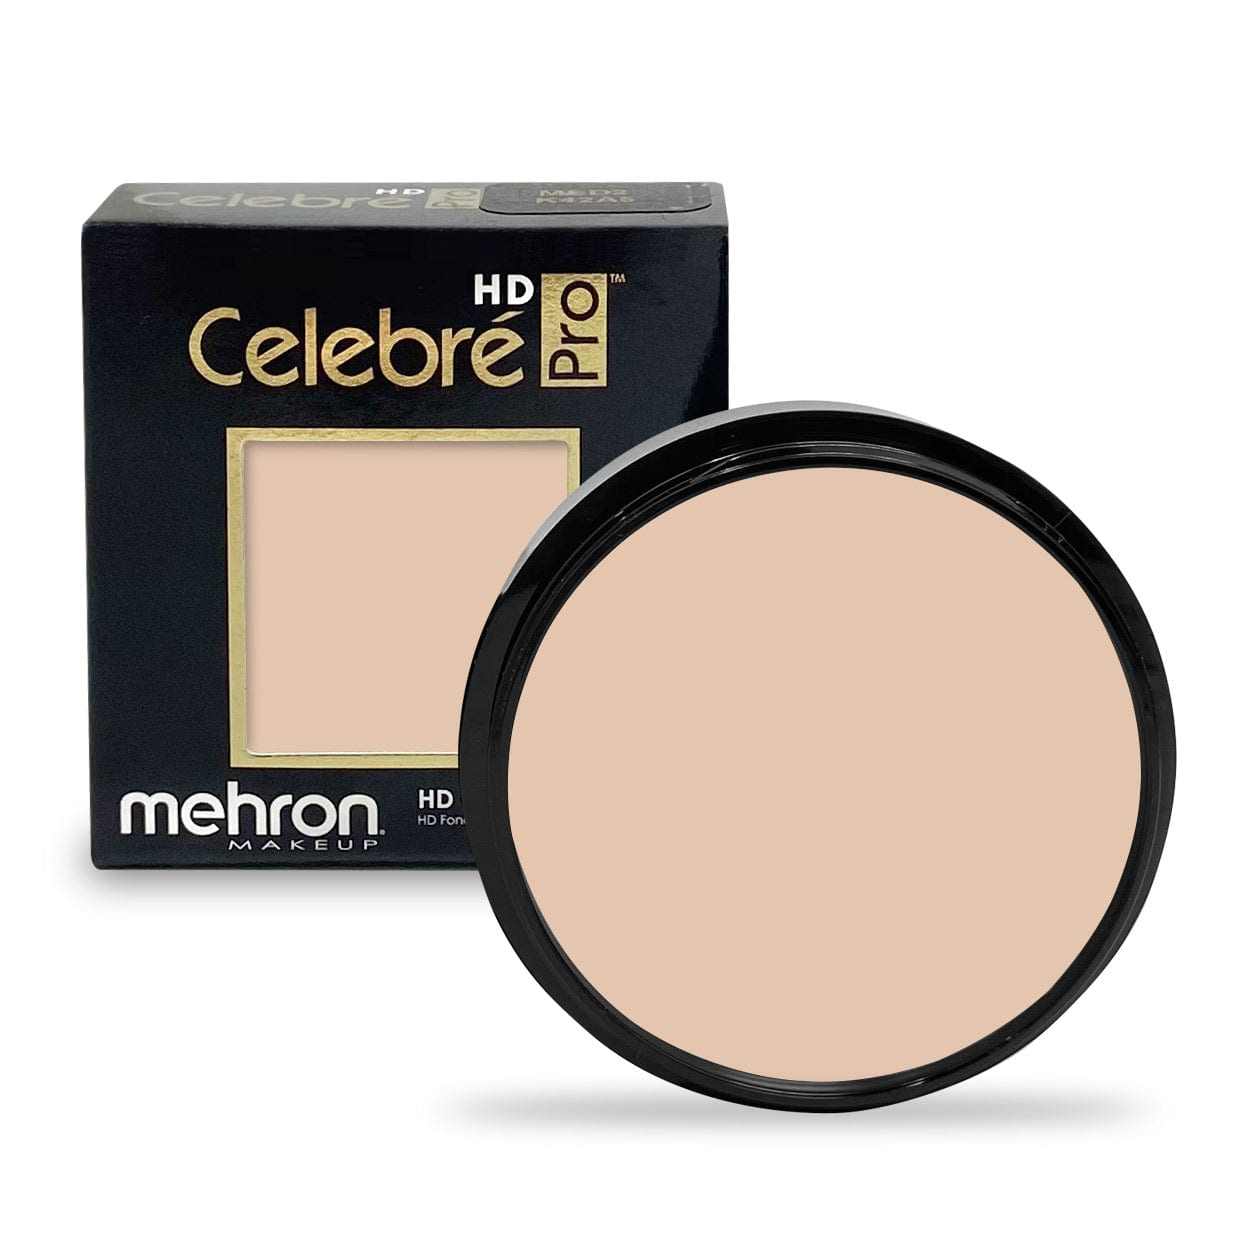 Mehron Celebre Pro HD Cream 25g - Light 2 - Mehron